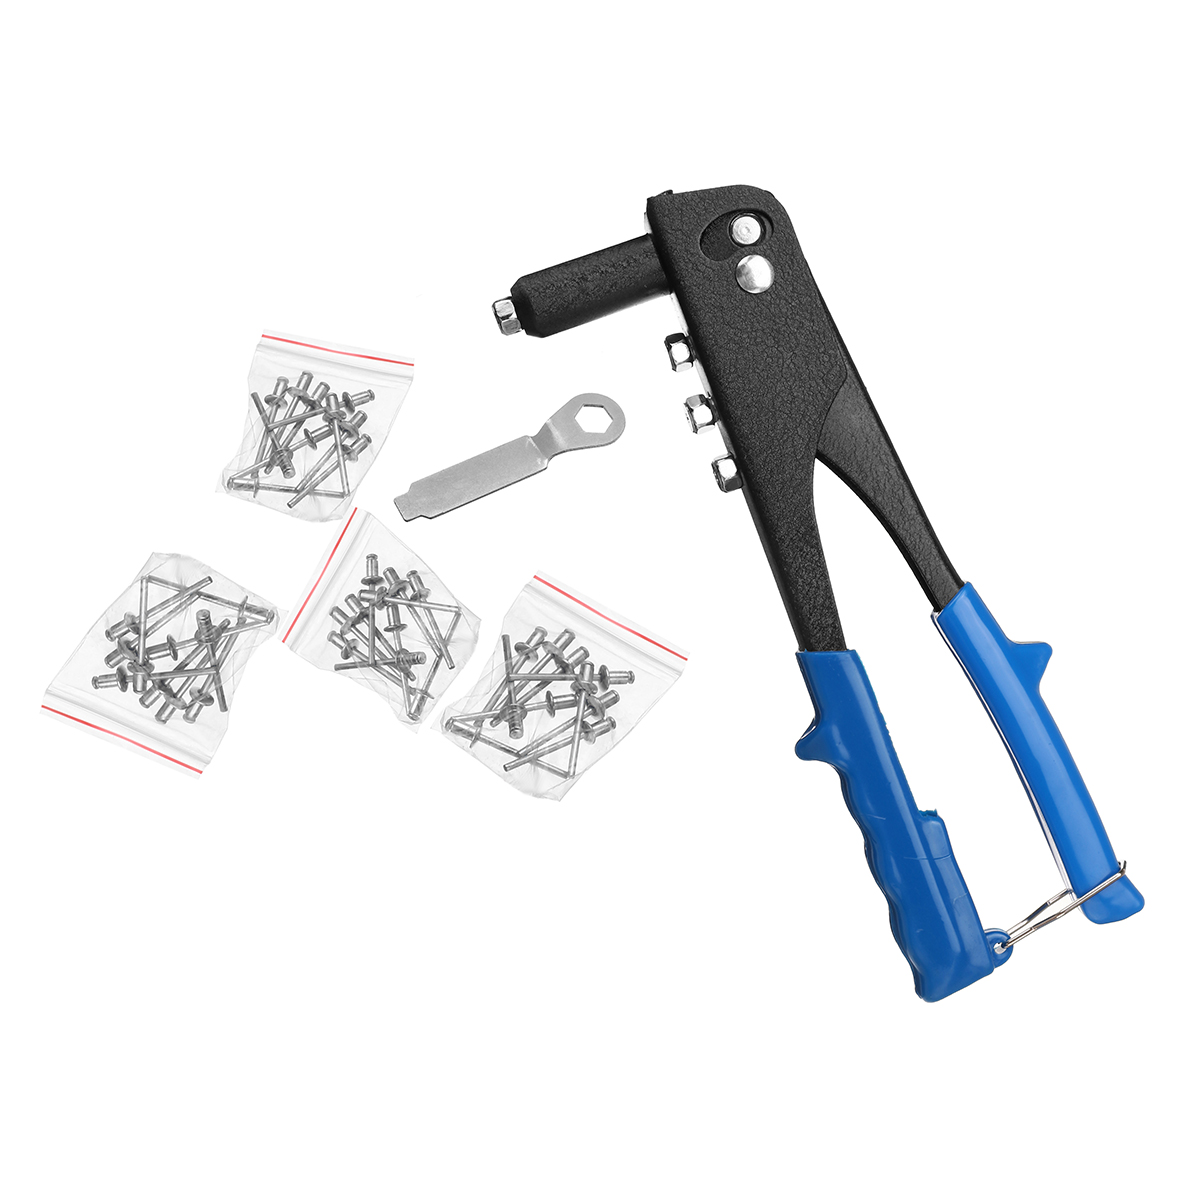 Portable-Pulling-Rivet-G-un-Blind-Rivet-Hand-Tool-with-40pcs-Rivet-For-Metal-Woodworking-1546842-1